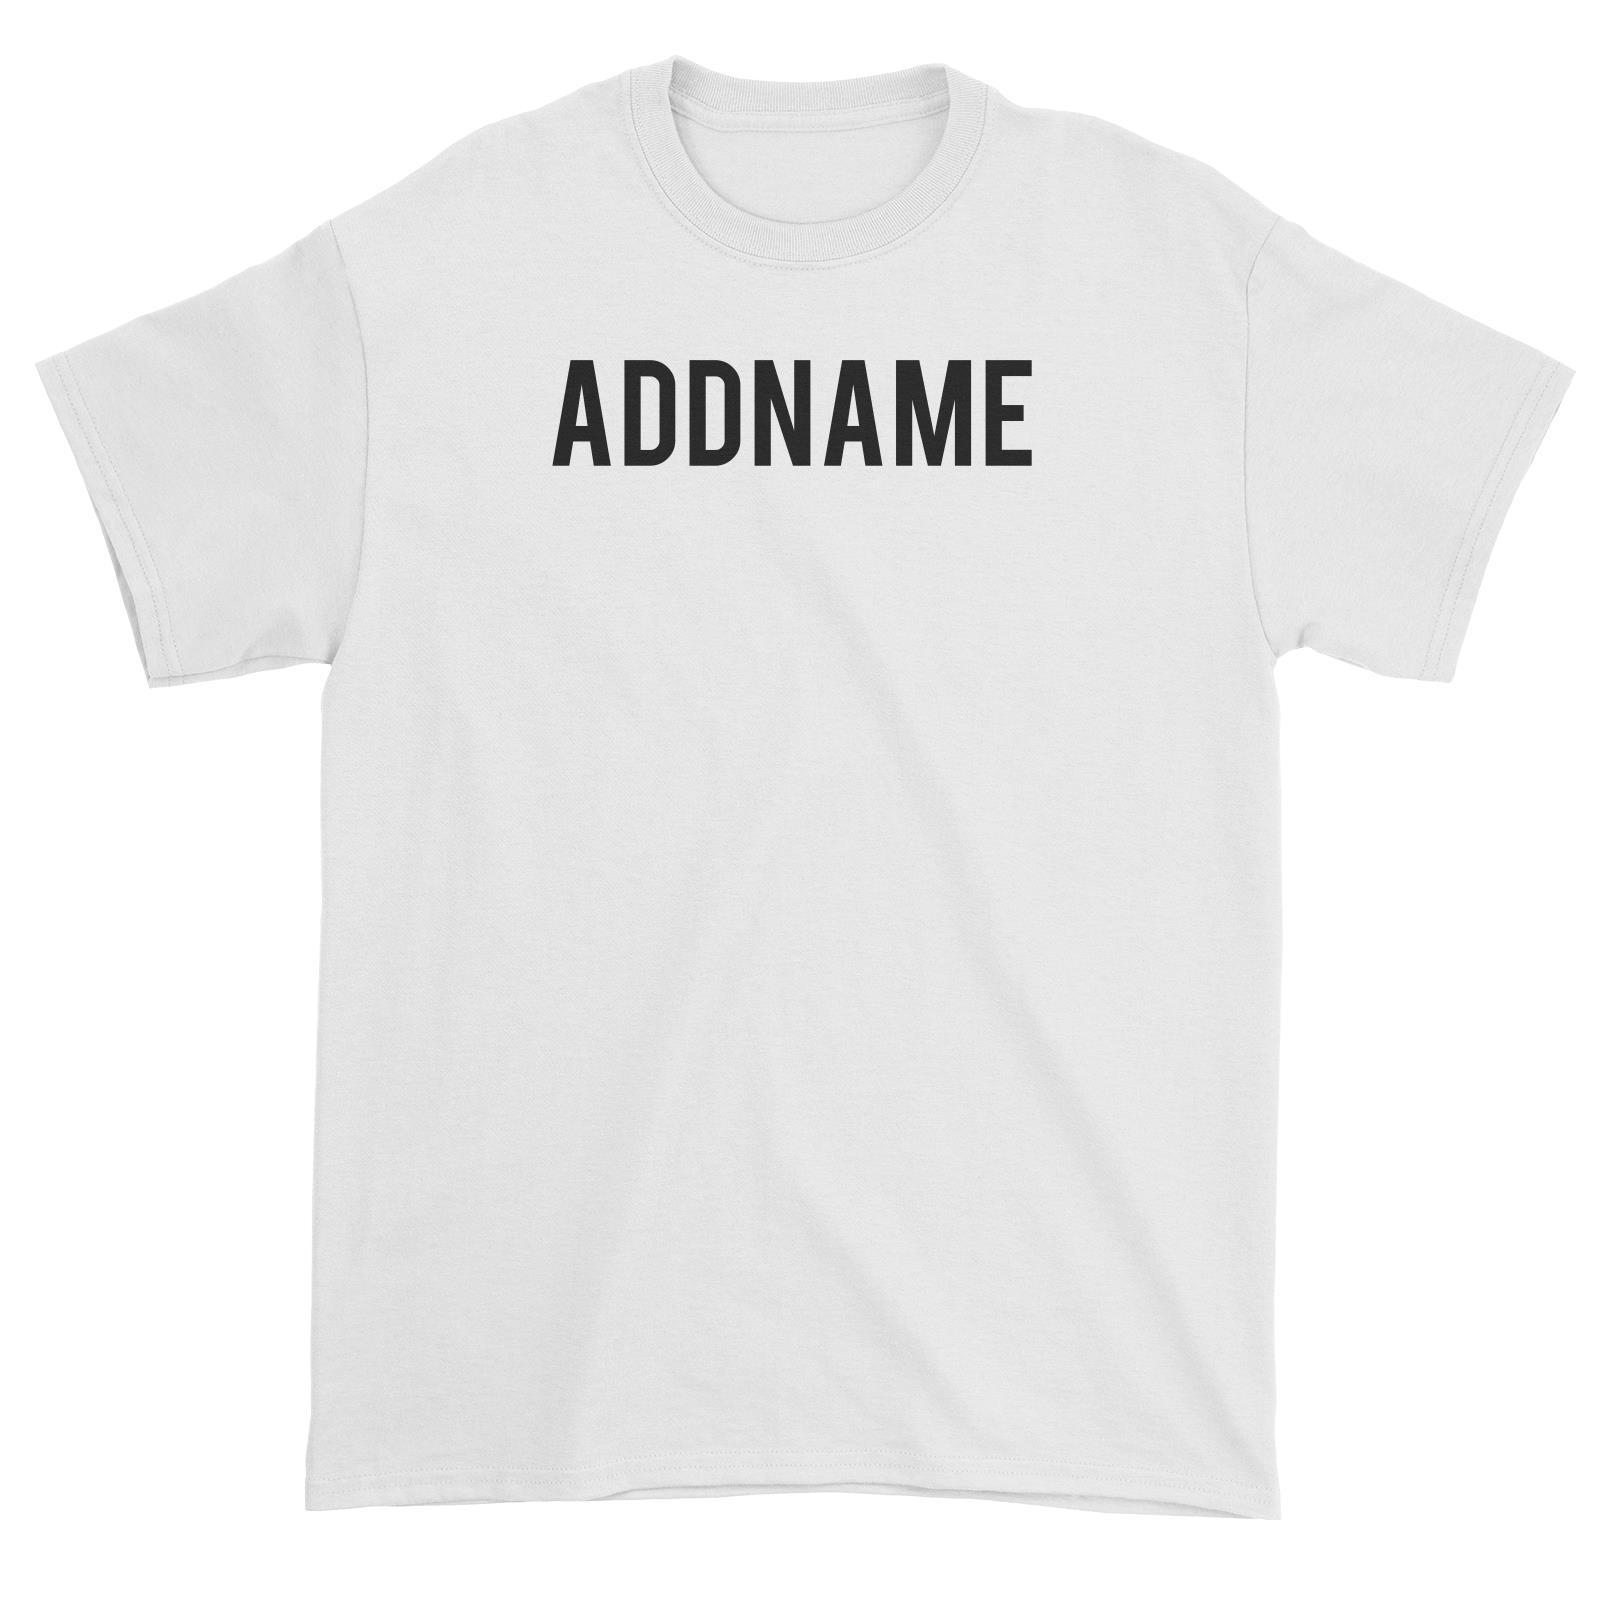 If Lost Return To Addname Original Unisex T-Shirt